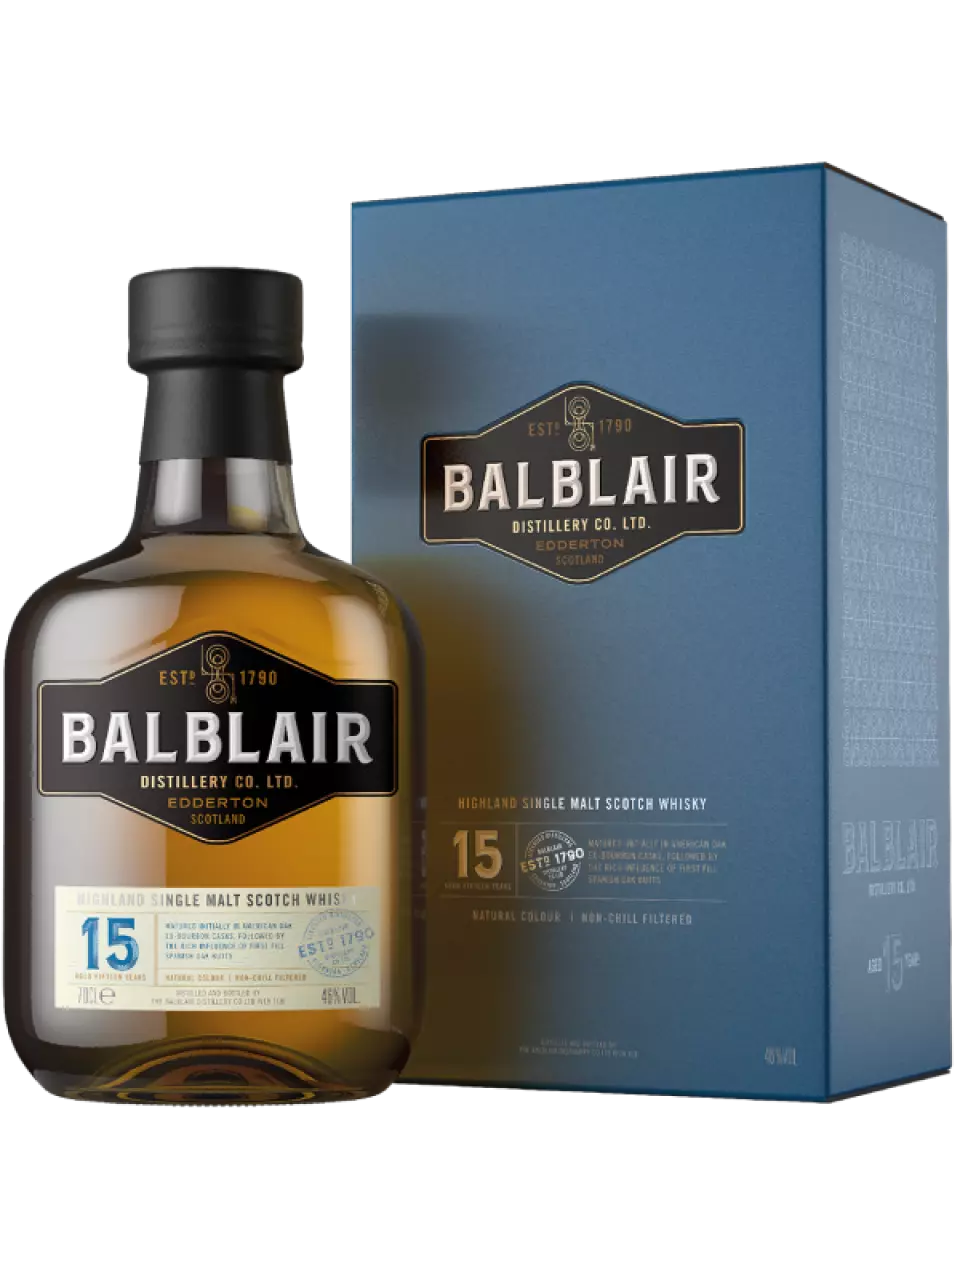 Balblair 15 Year Old The Balblair Collection whisky listing